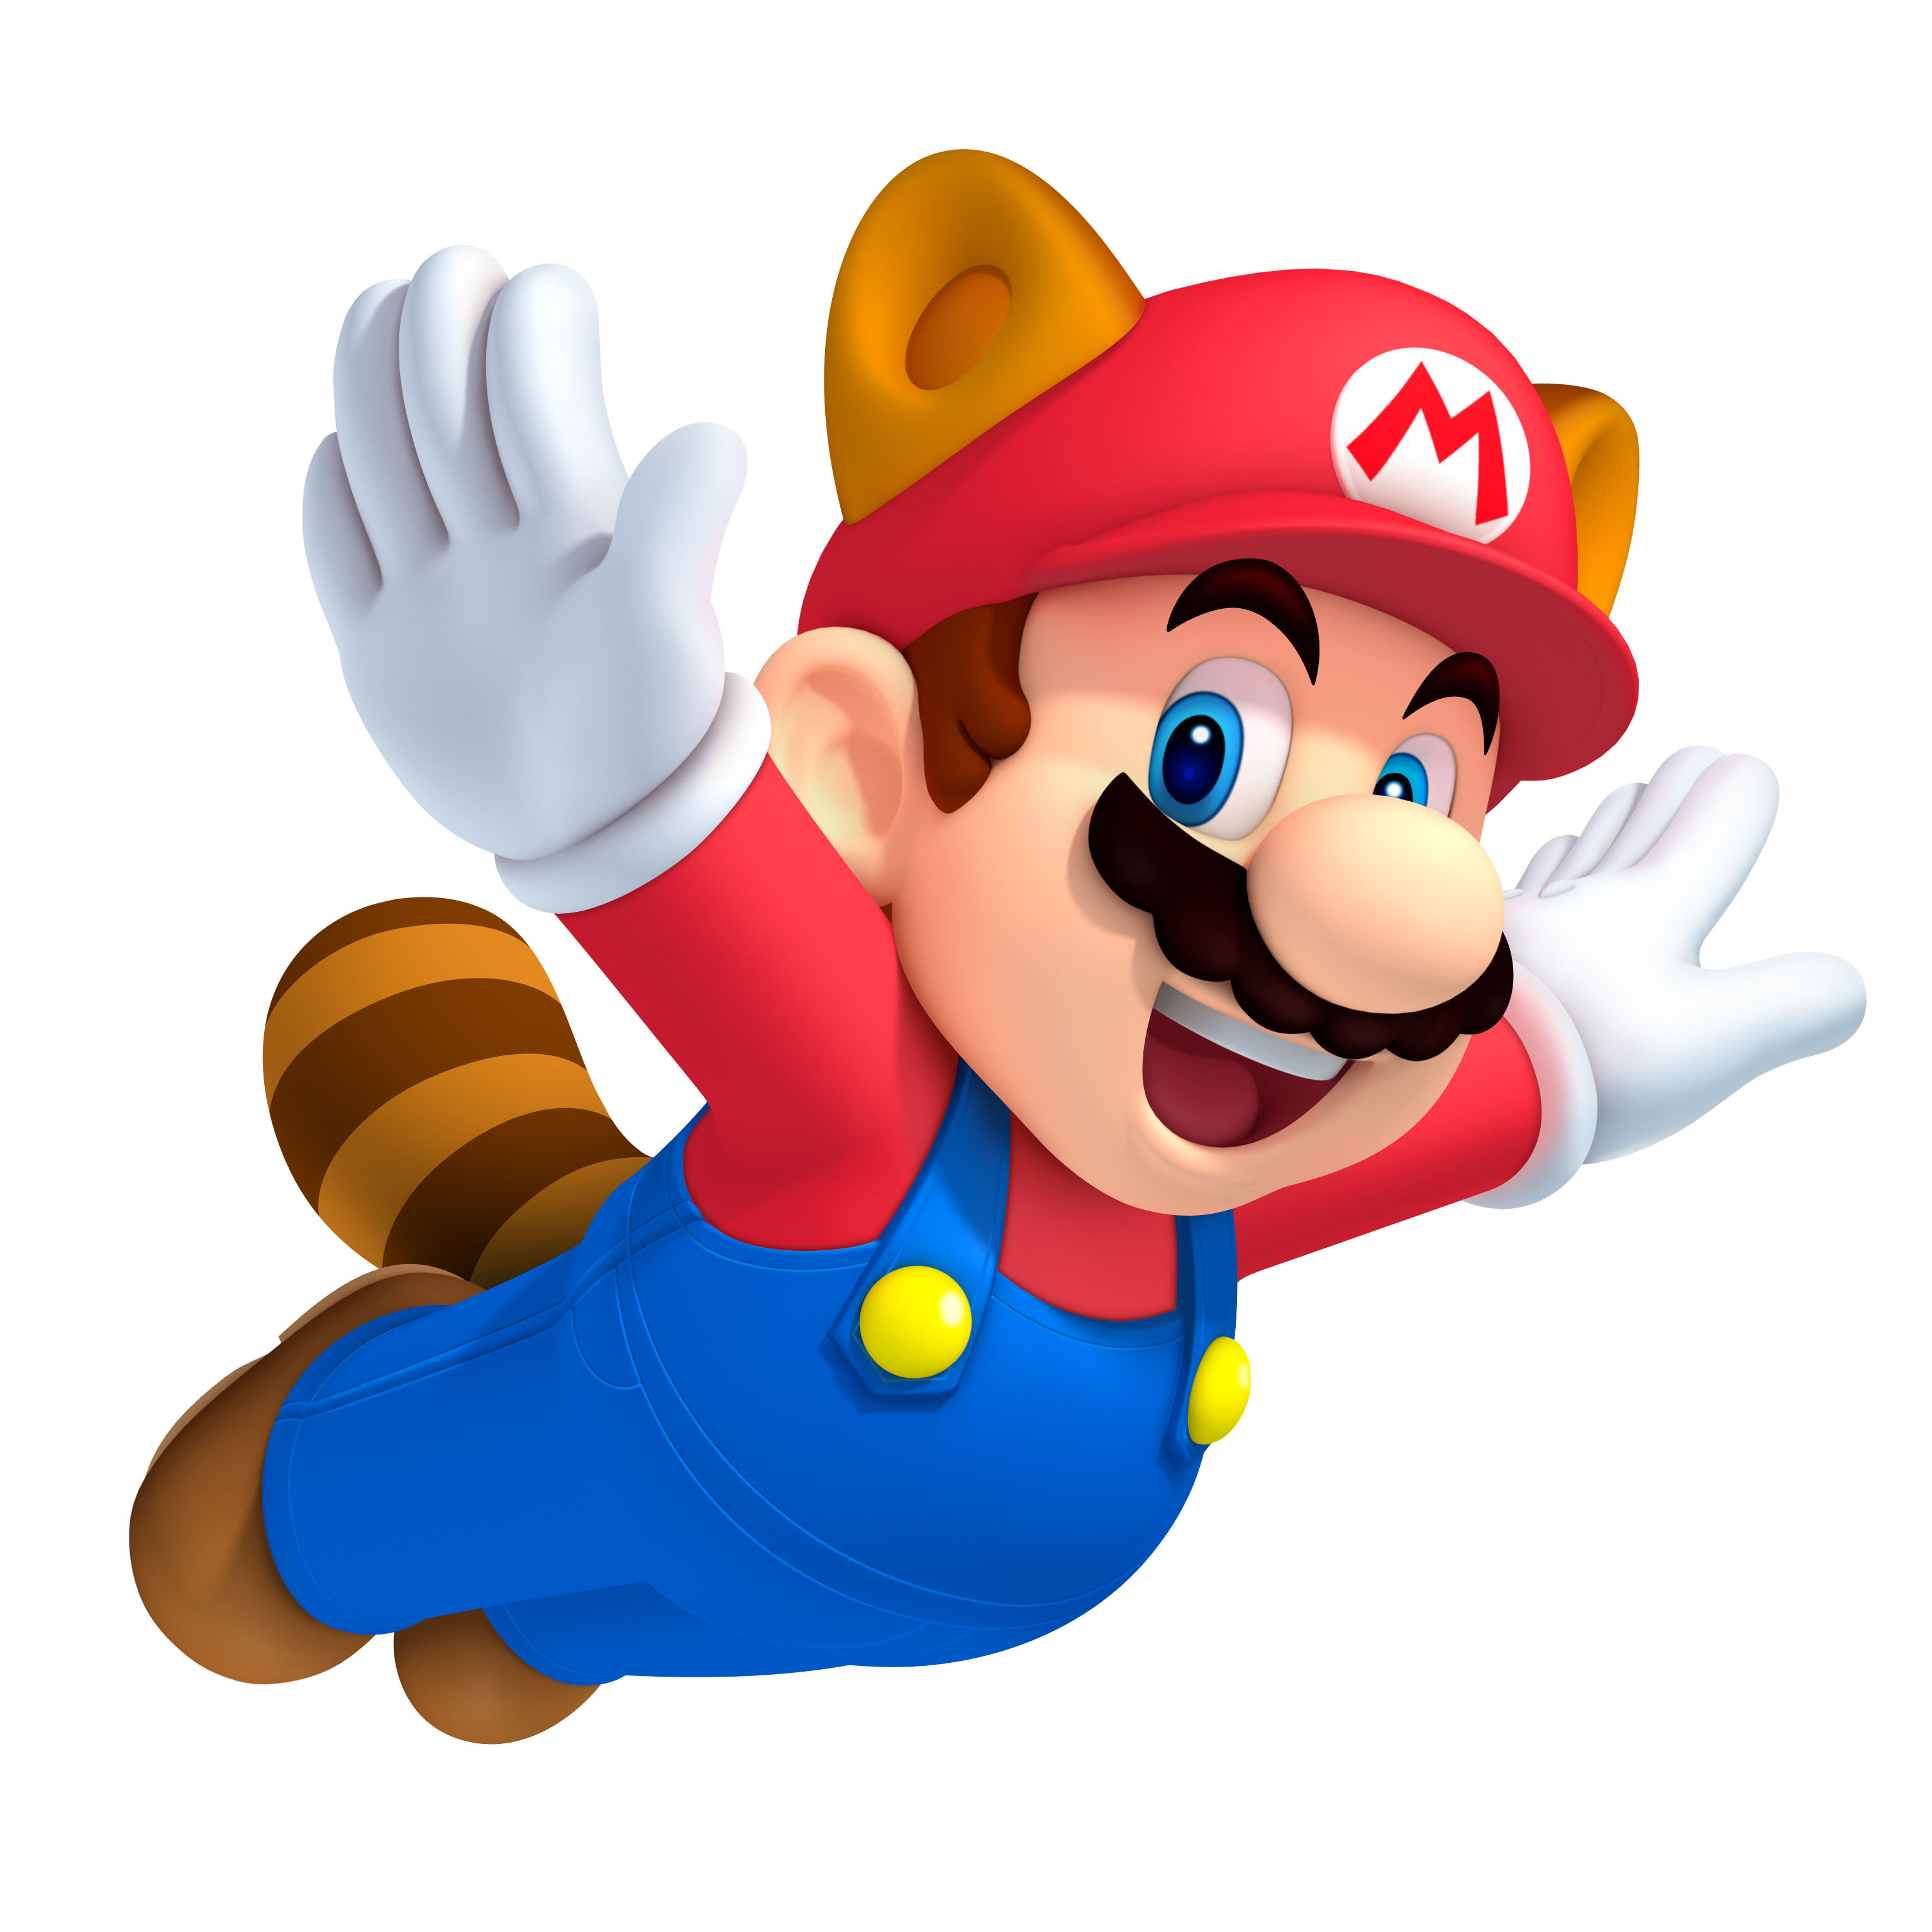 Free Mario Bros., Download Free Clip Art, Free Clip Art on.